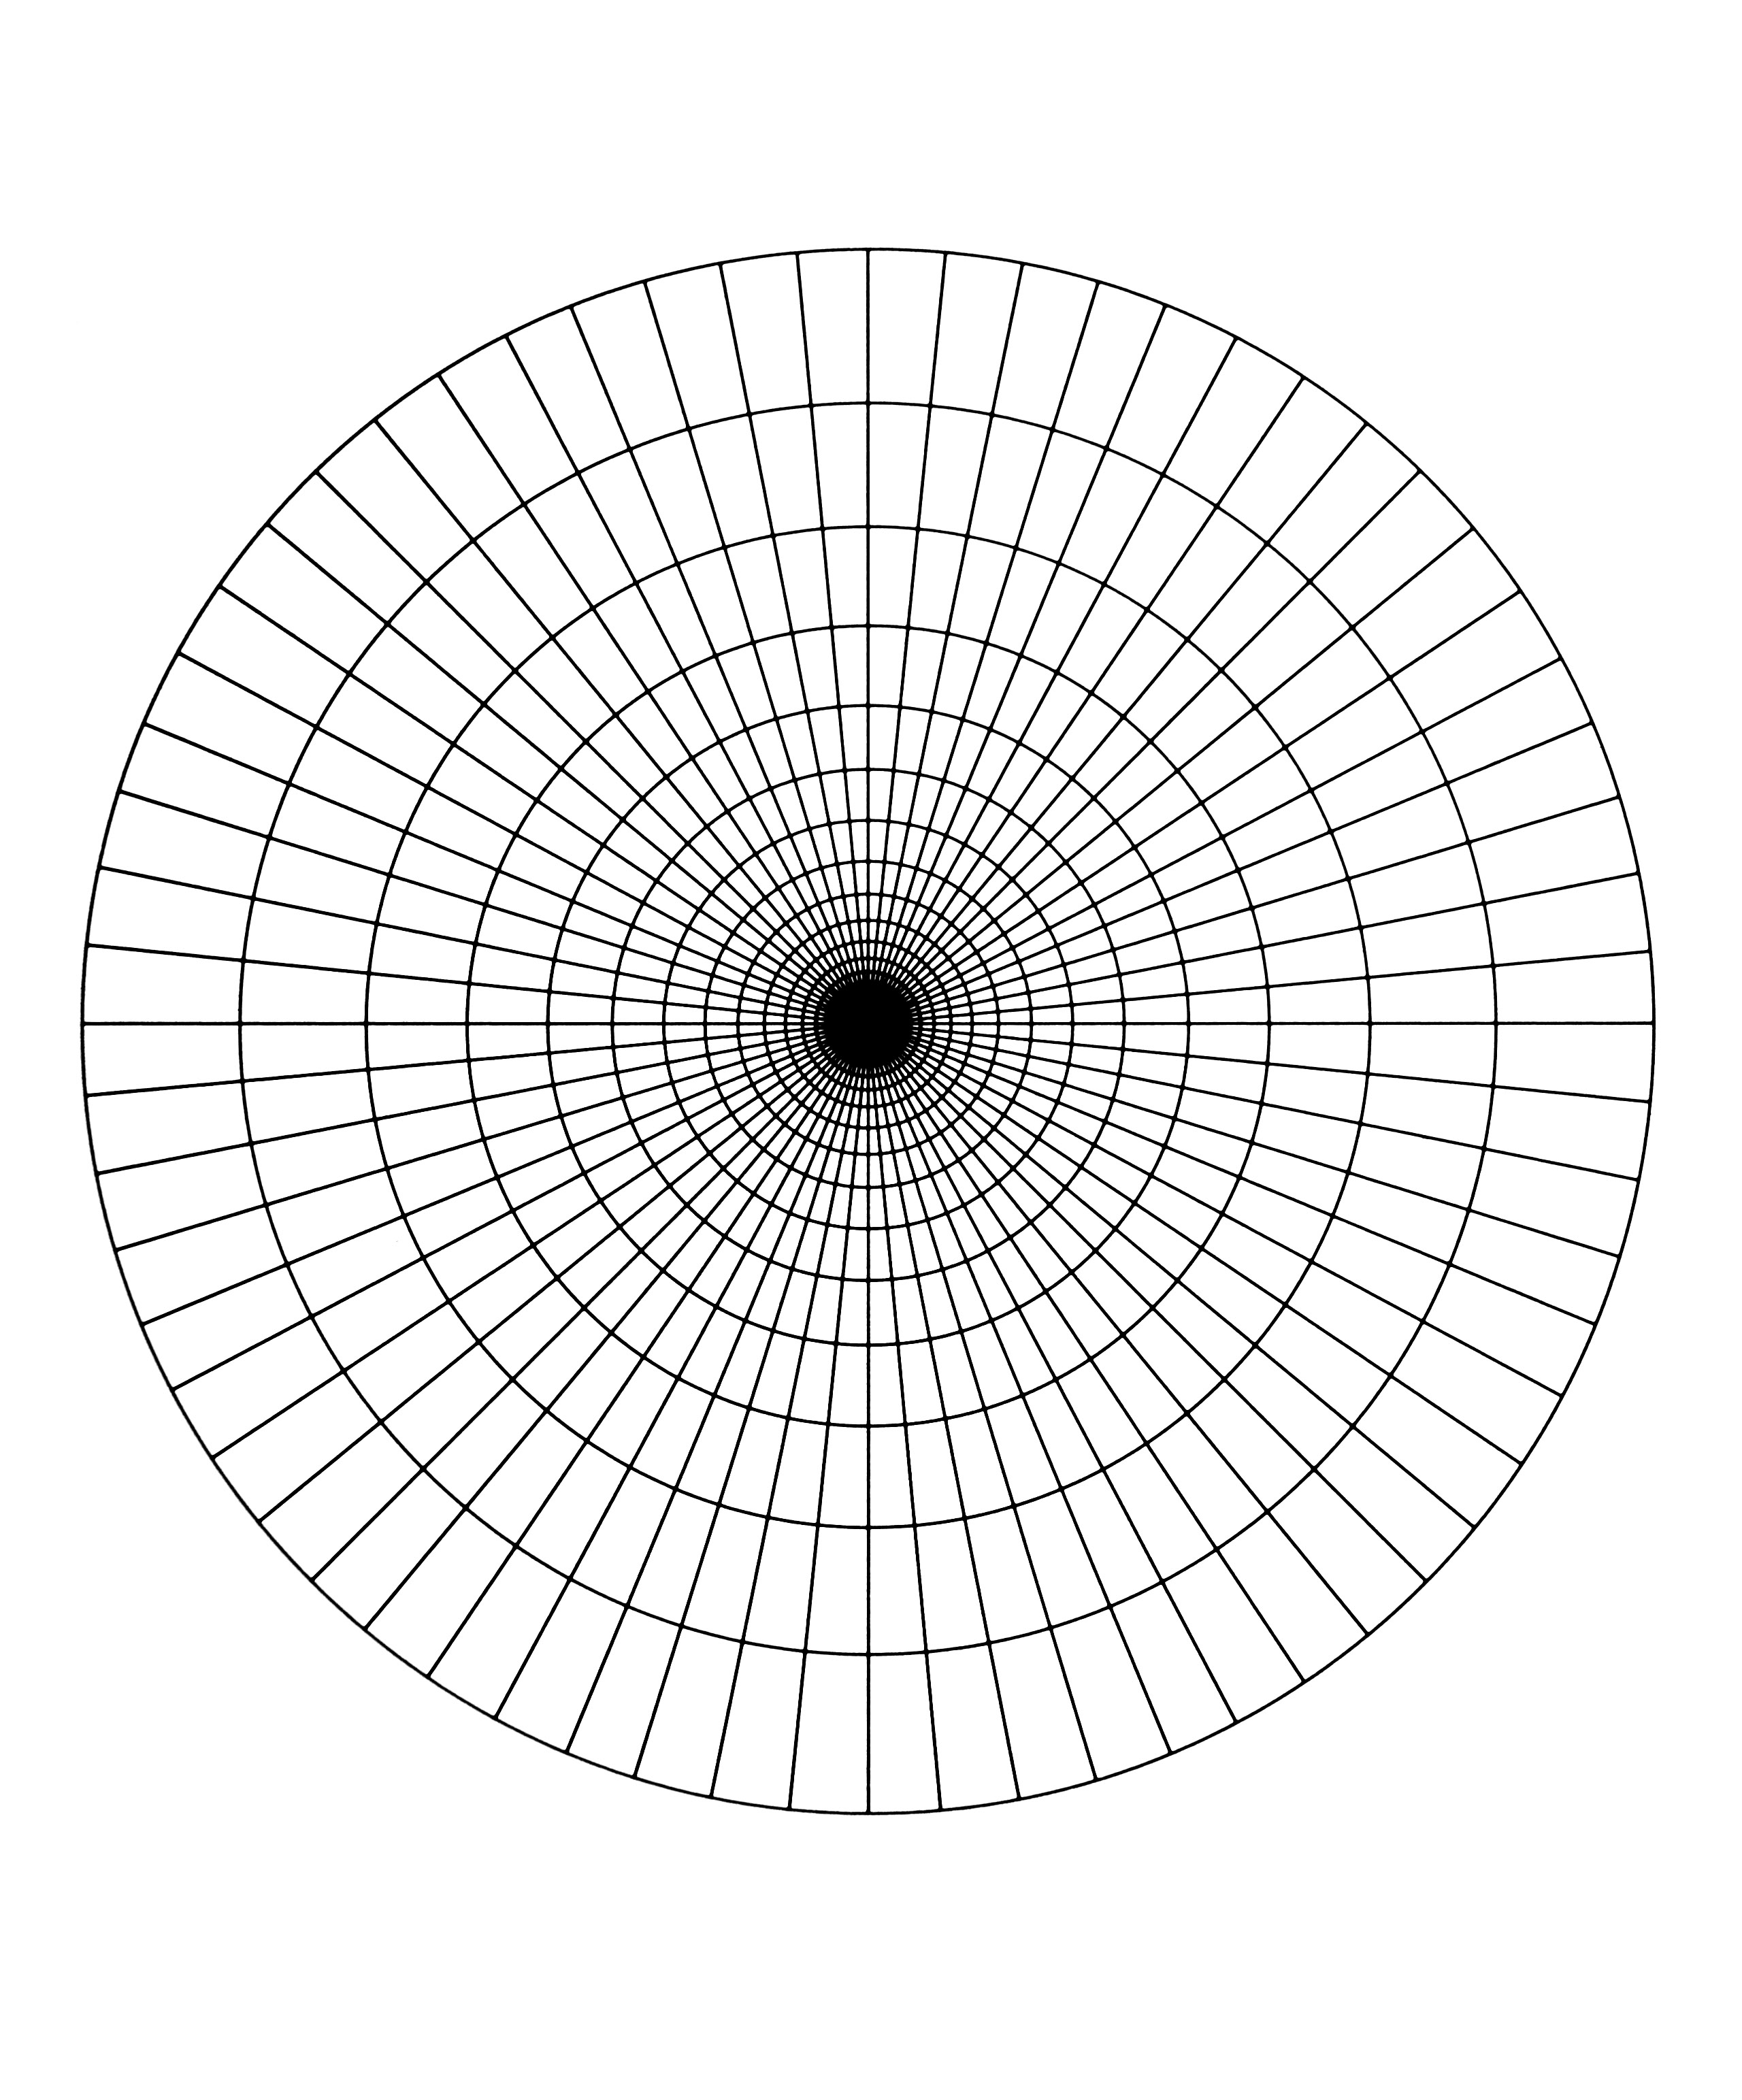 Mandala com padrões geométricos - 12